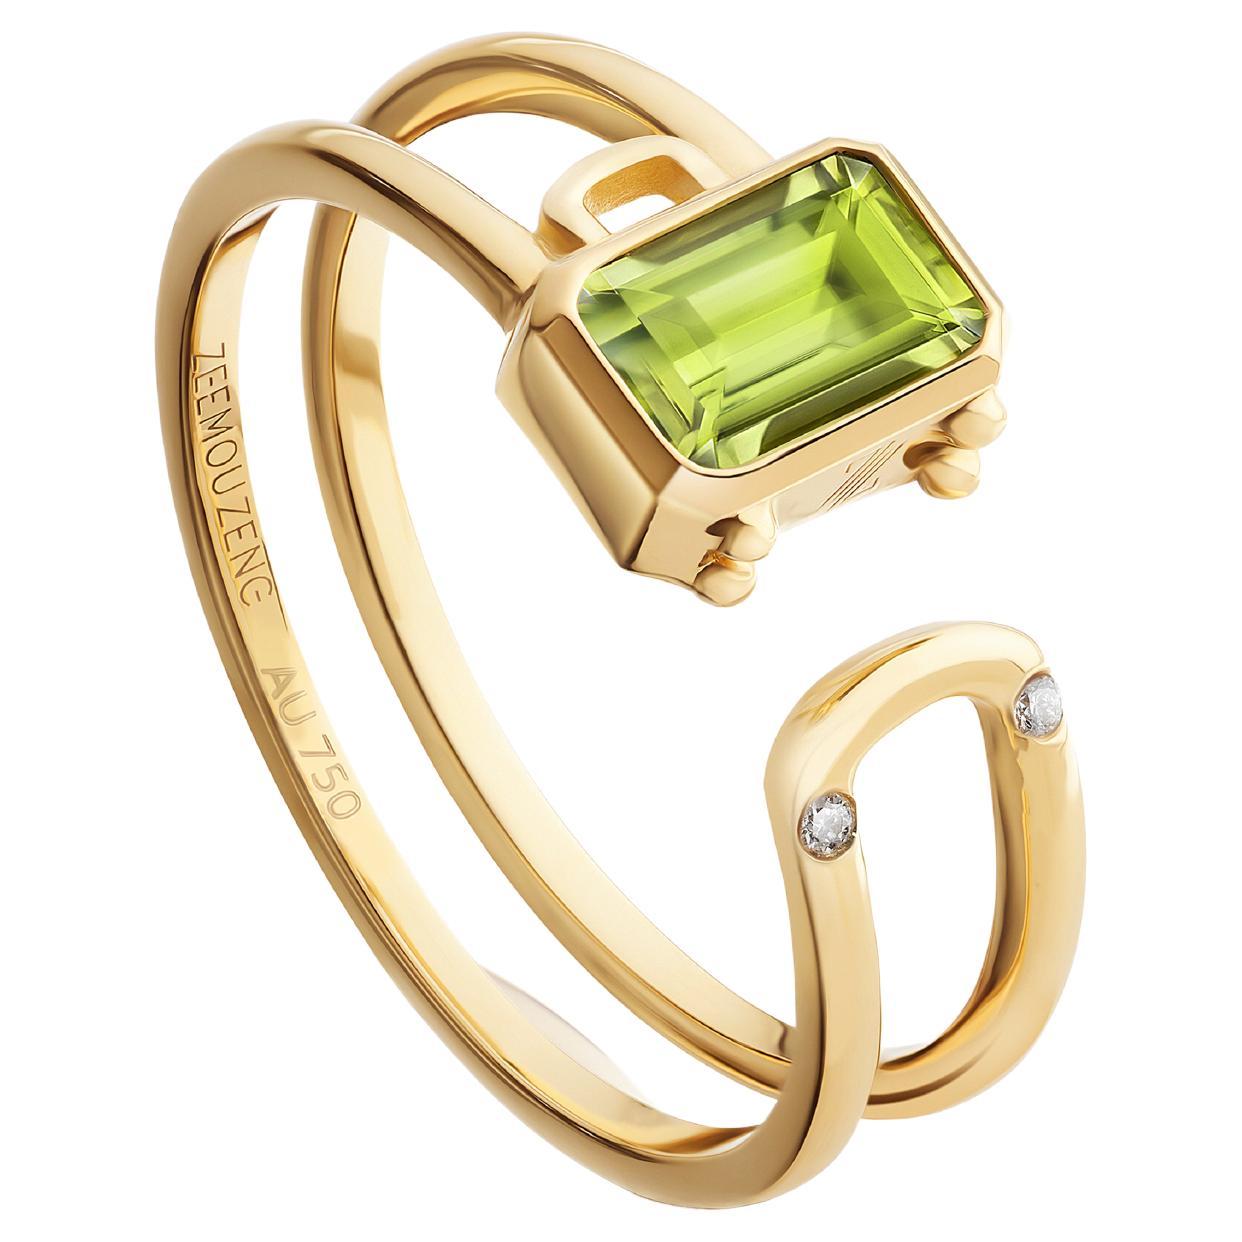 Art of Travel "Gem in Travel Case" Ring 18k Yellow Gold Green Peridot Diamond For Sale